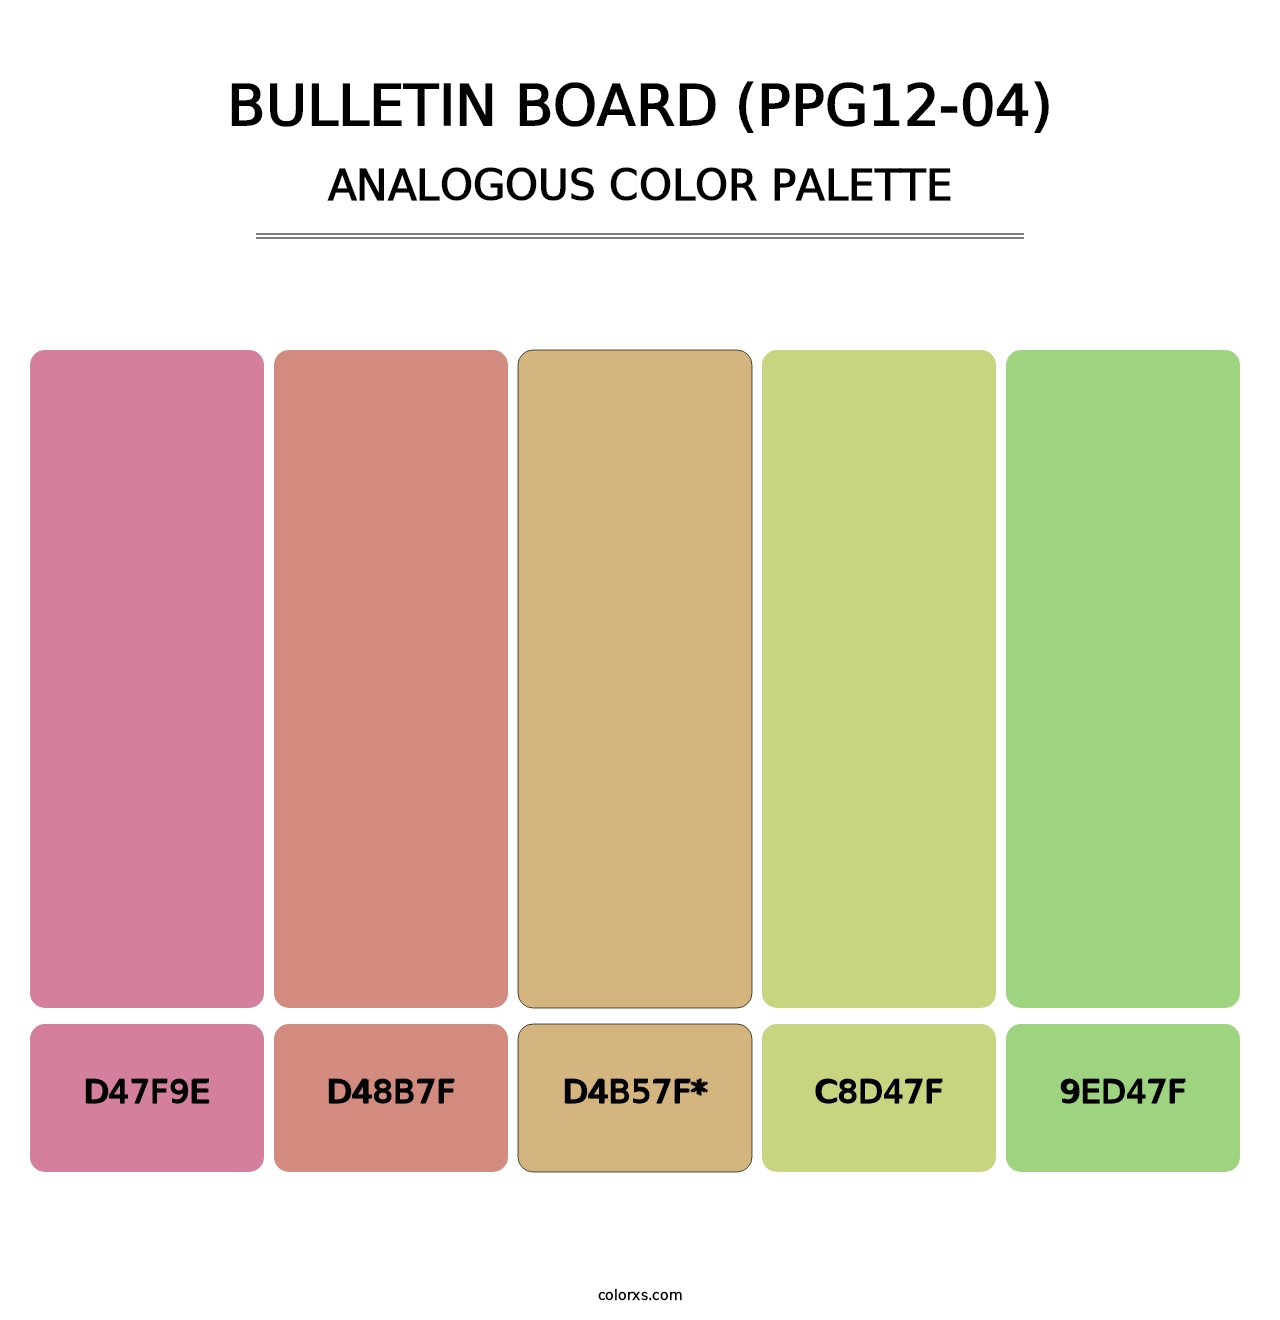 Bulletin Board (PPG12-04) - Analogous Color Palette